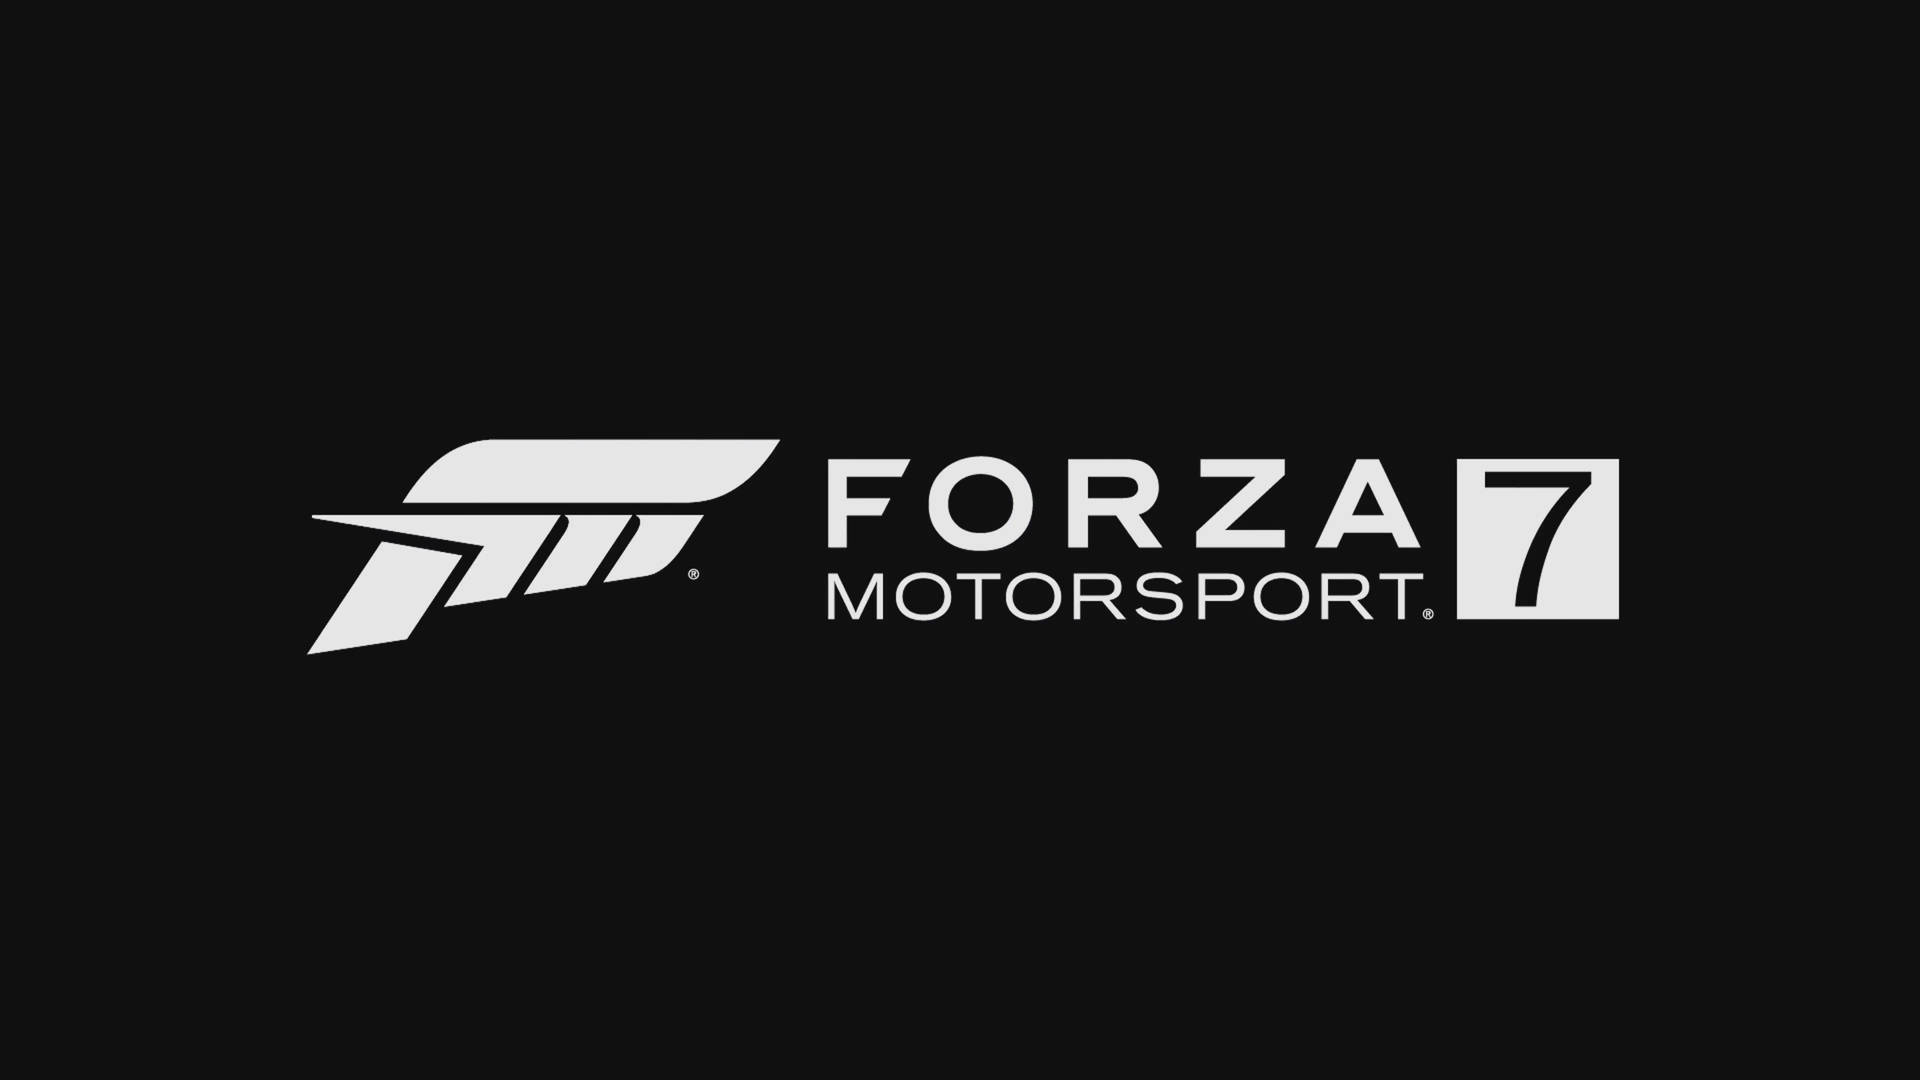 Forzamotorsport 7 Logo Wallpaper